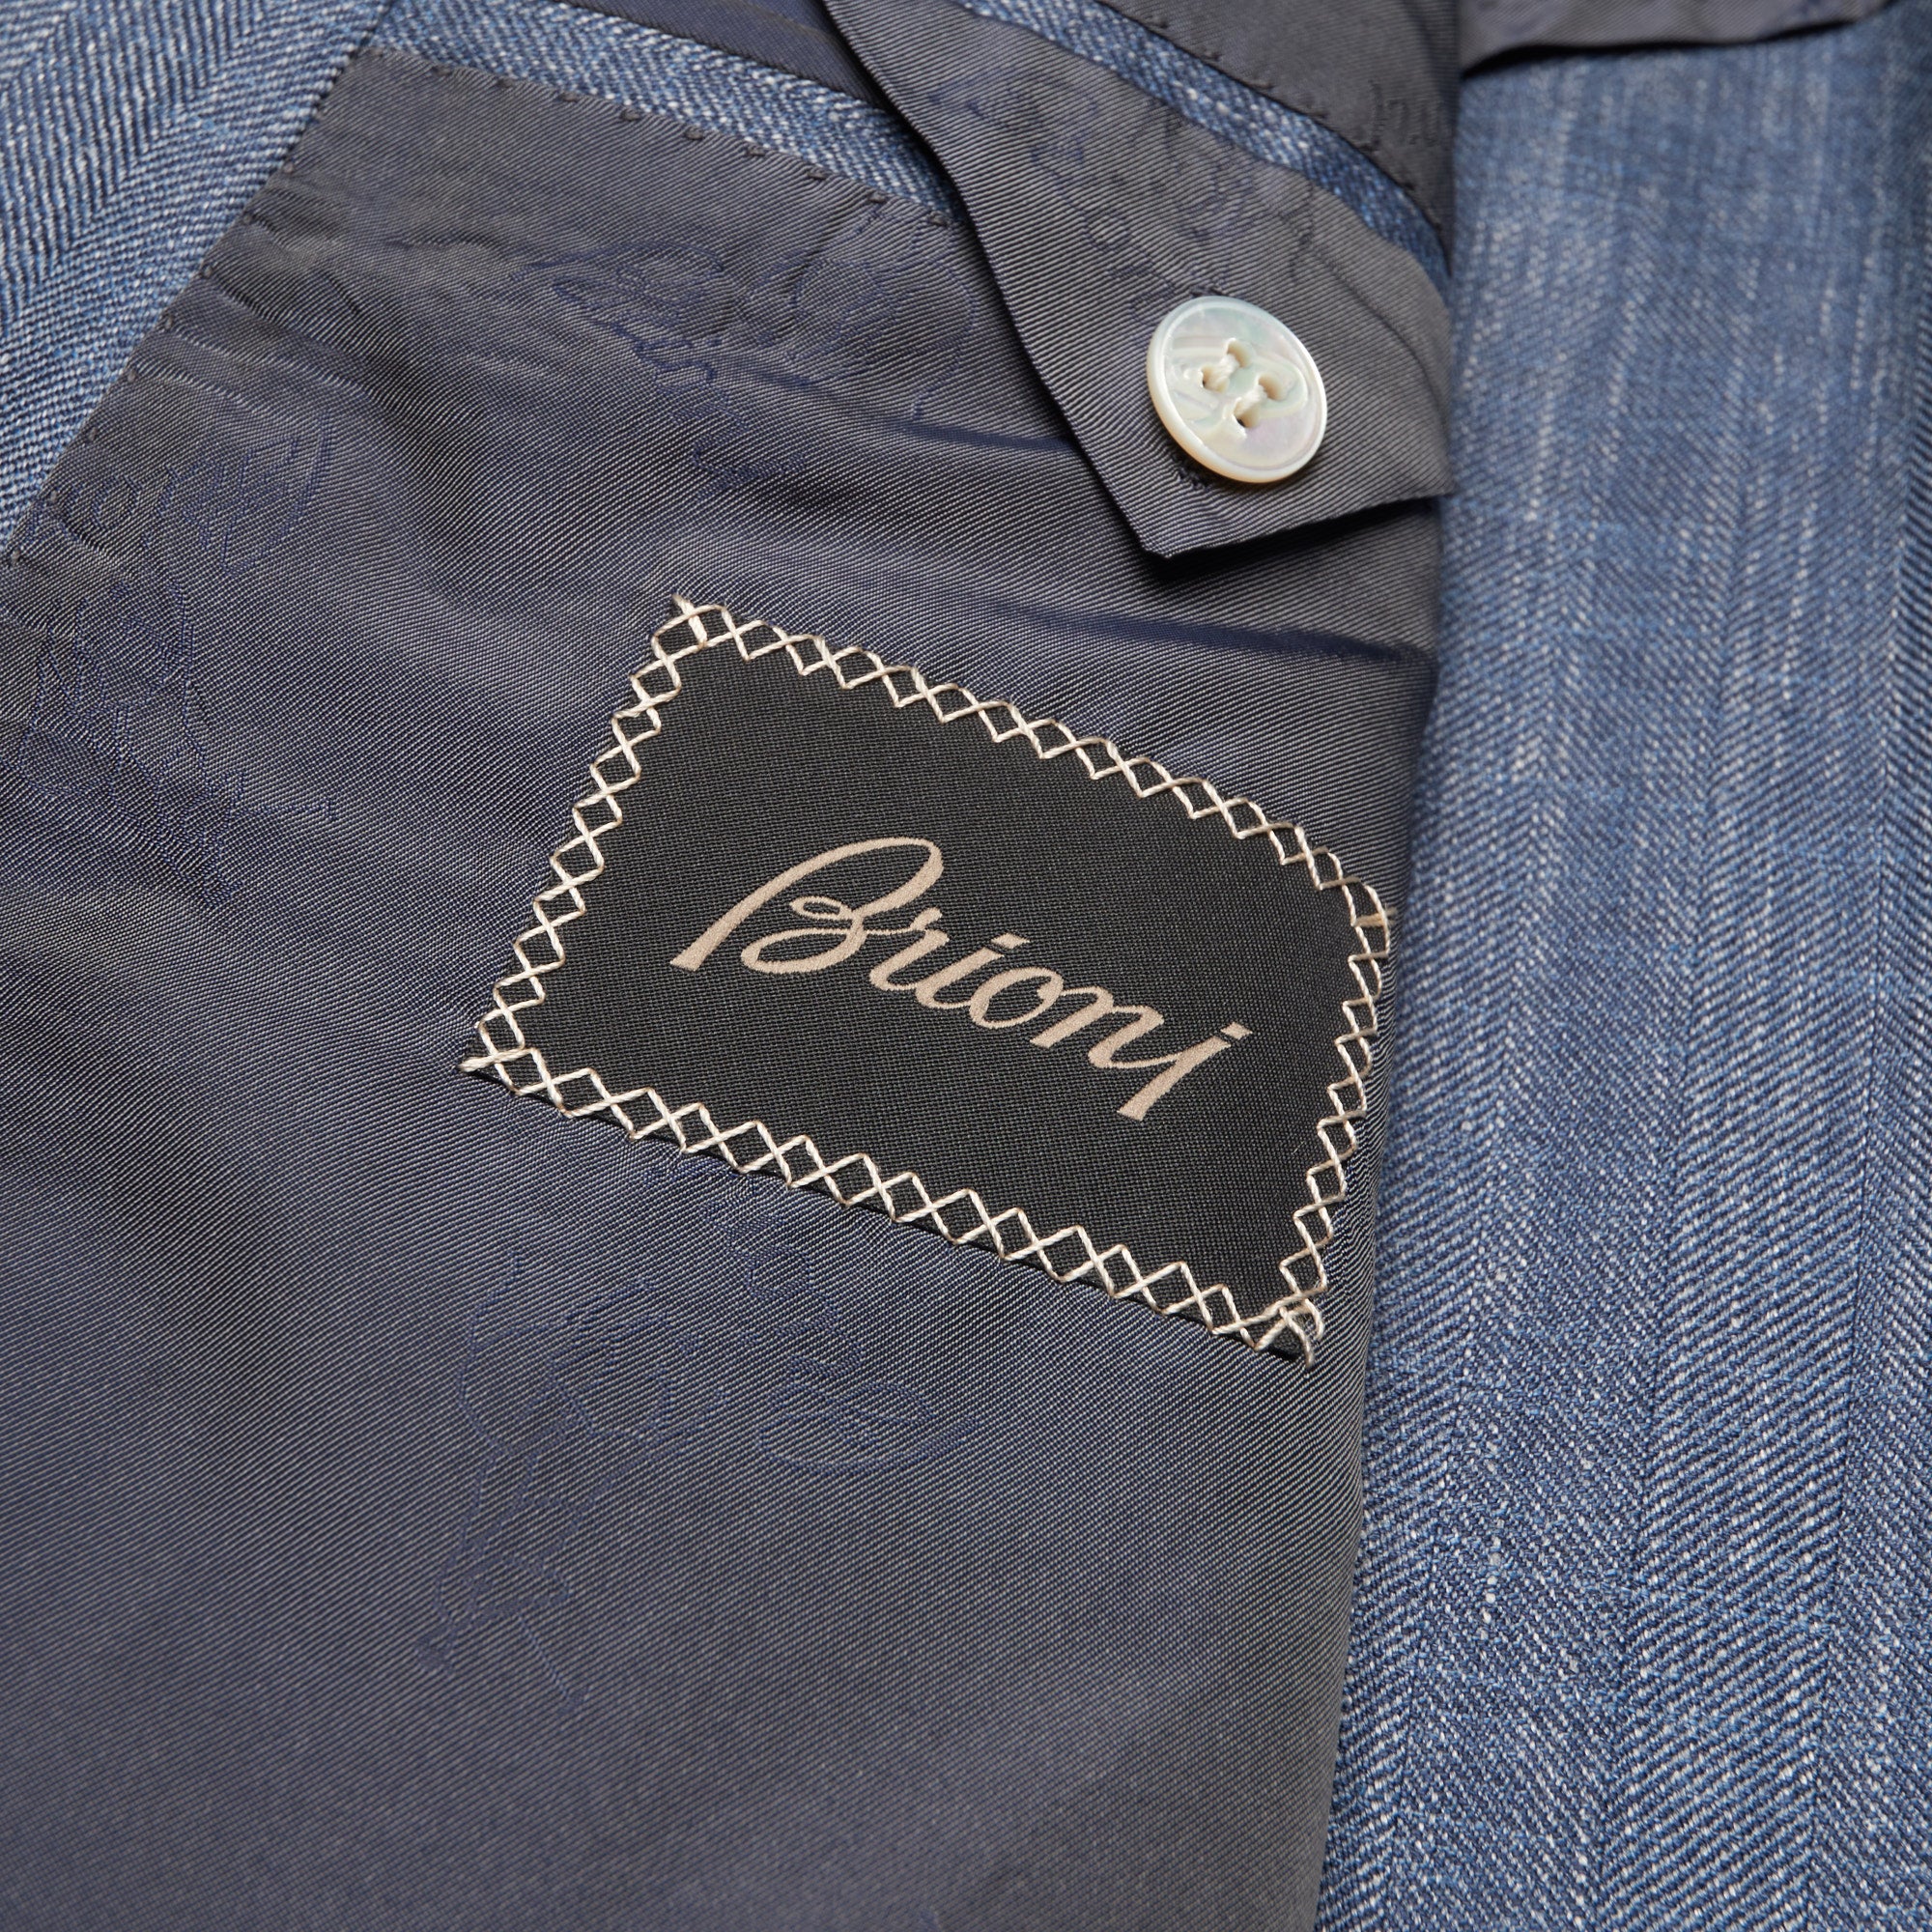 BRIONI "COLOSSEO" Handmade Blue Herringbone Wool-Silk-Linen Jacket EU 50 NEW US 40 BRIONI